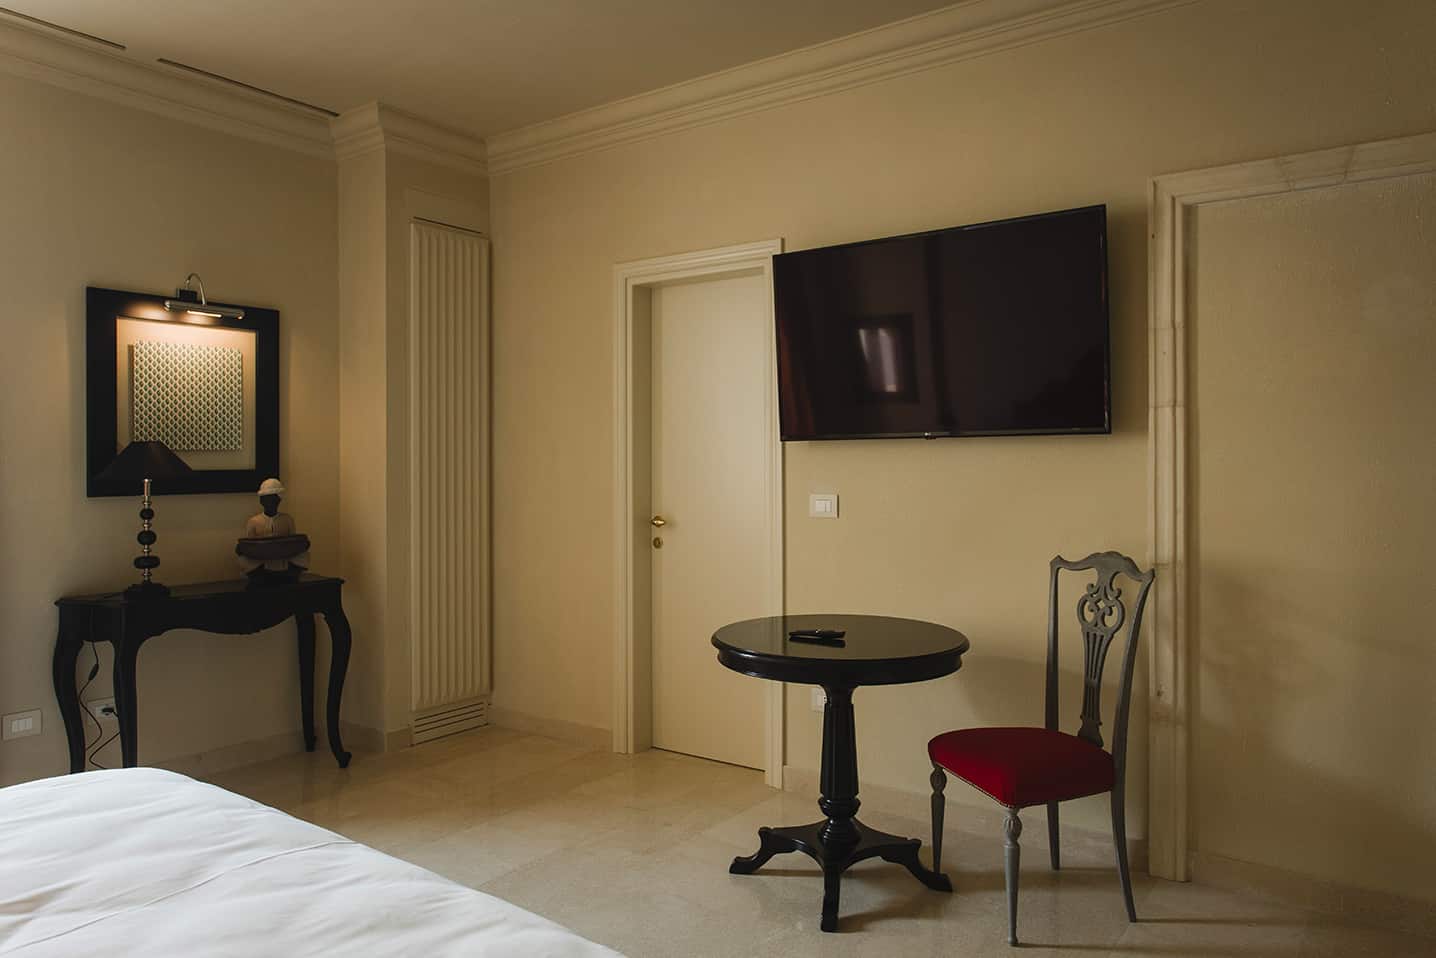 The Deluxe rooms, Hotel in Matera - Alvino 1884